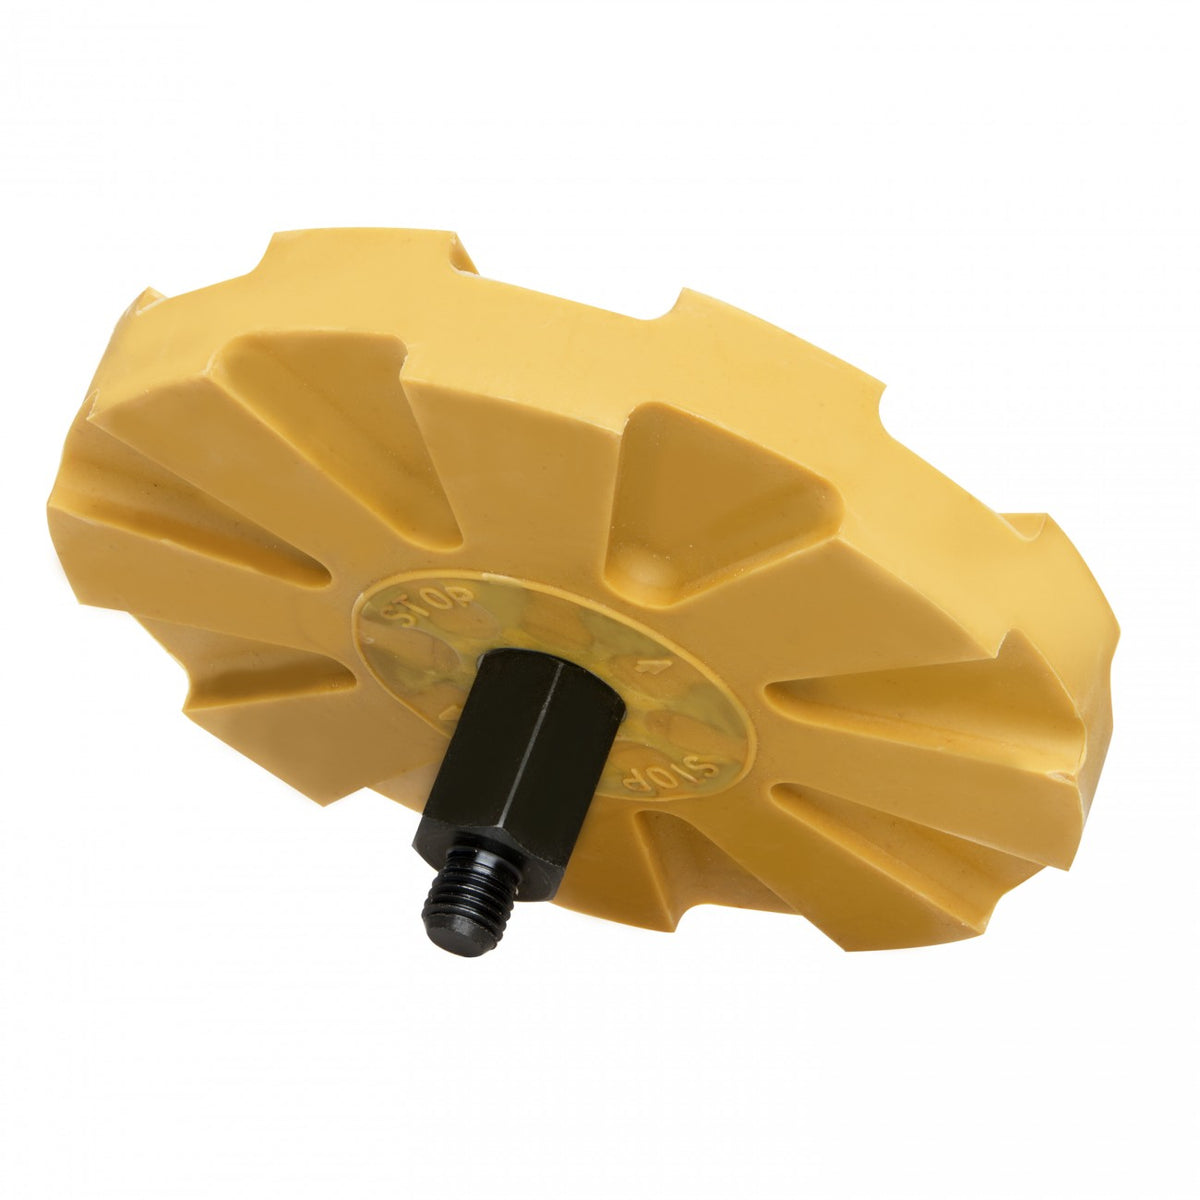 Pinstripe Decal Eraser Disc Wheel for Die Grinder - tool